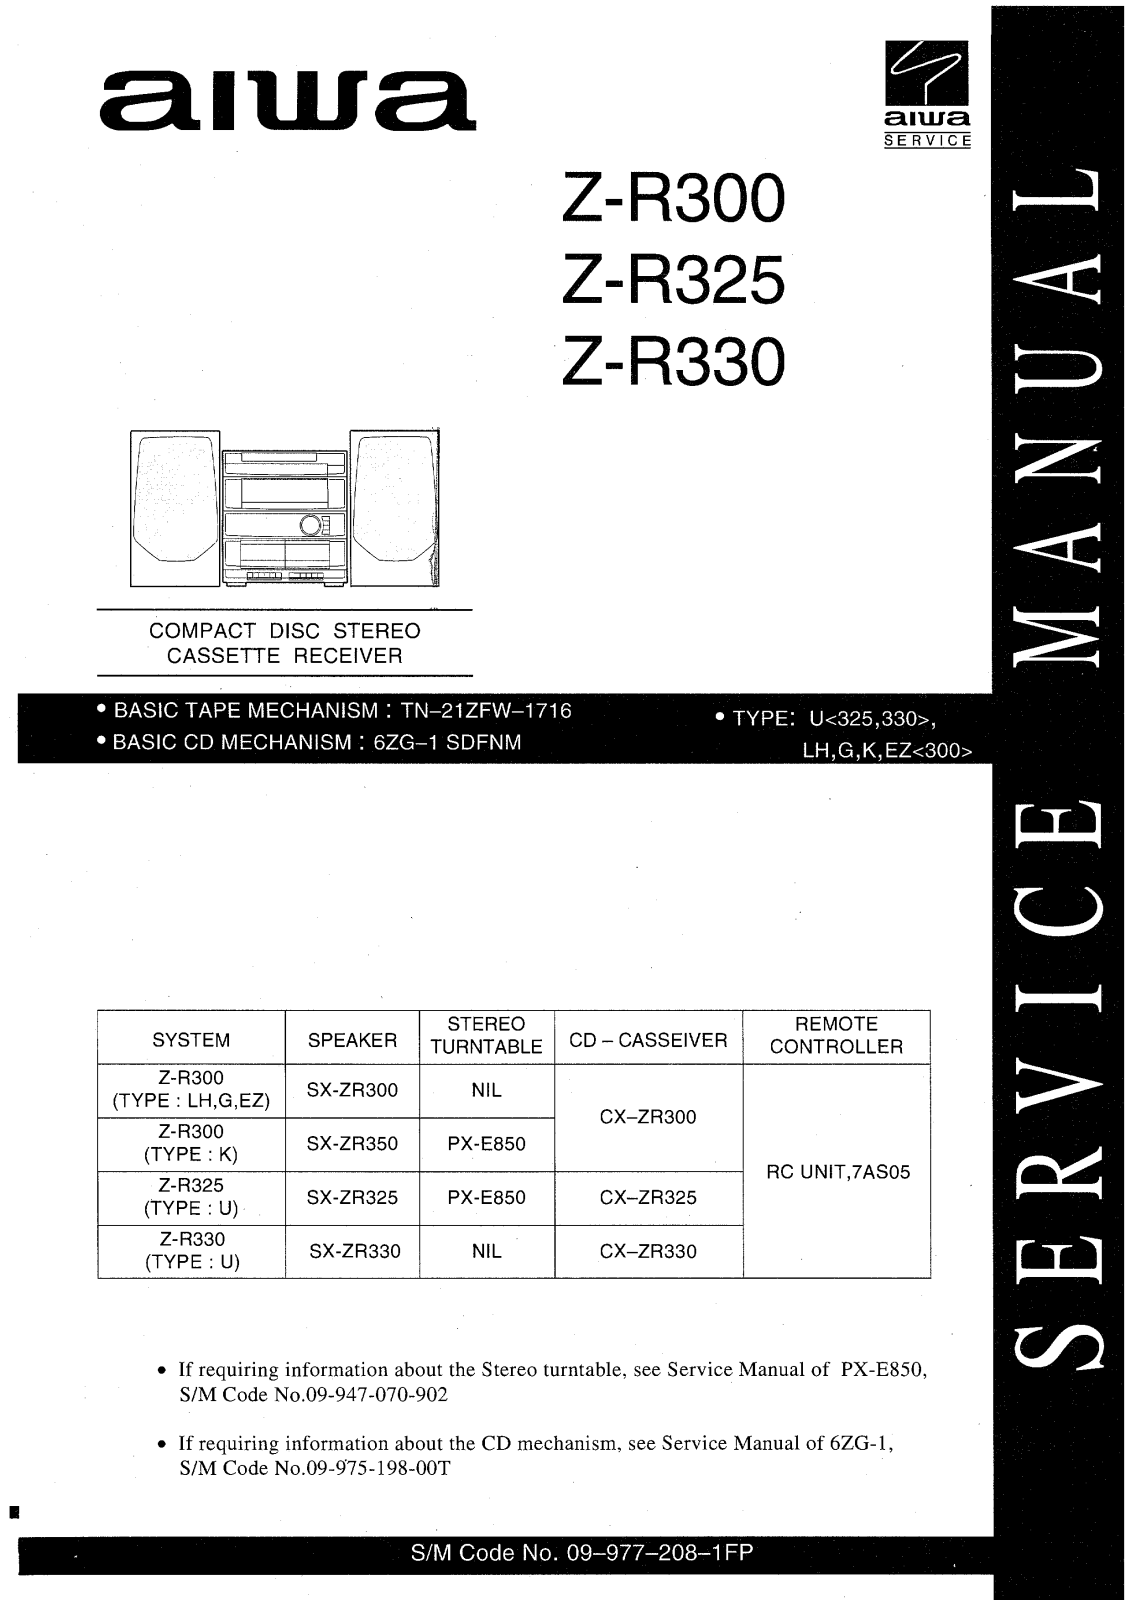 Aiwa CX-ZR300, CX-ZR325, CX-ZR330 Schematic